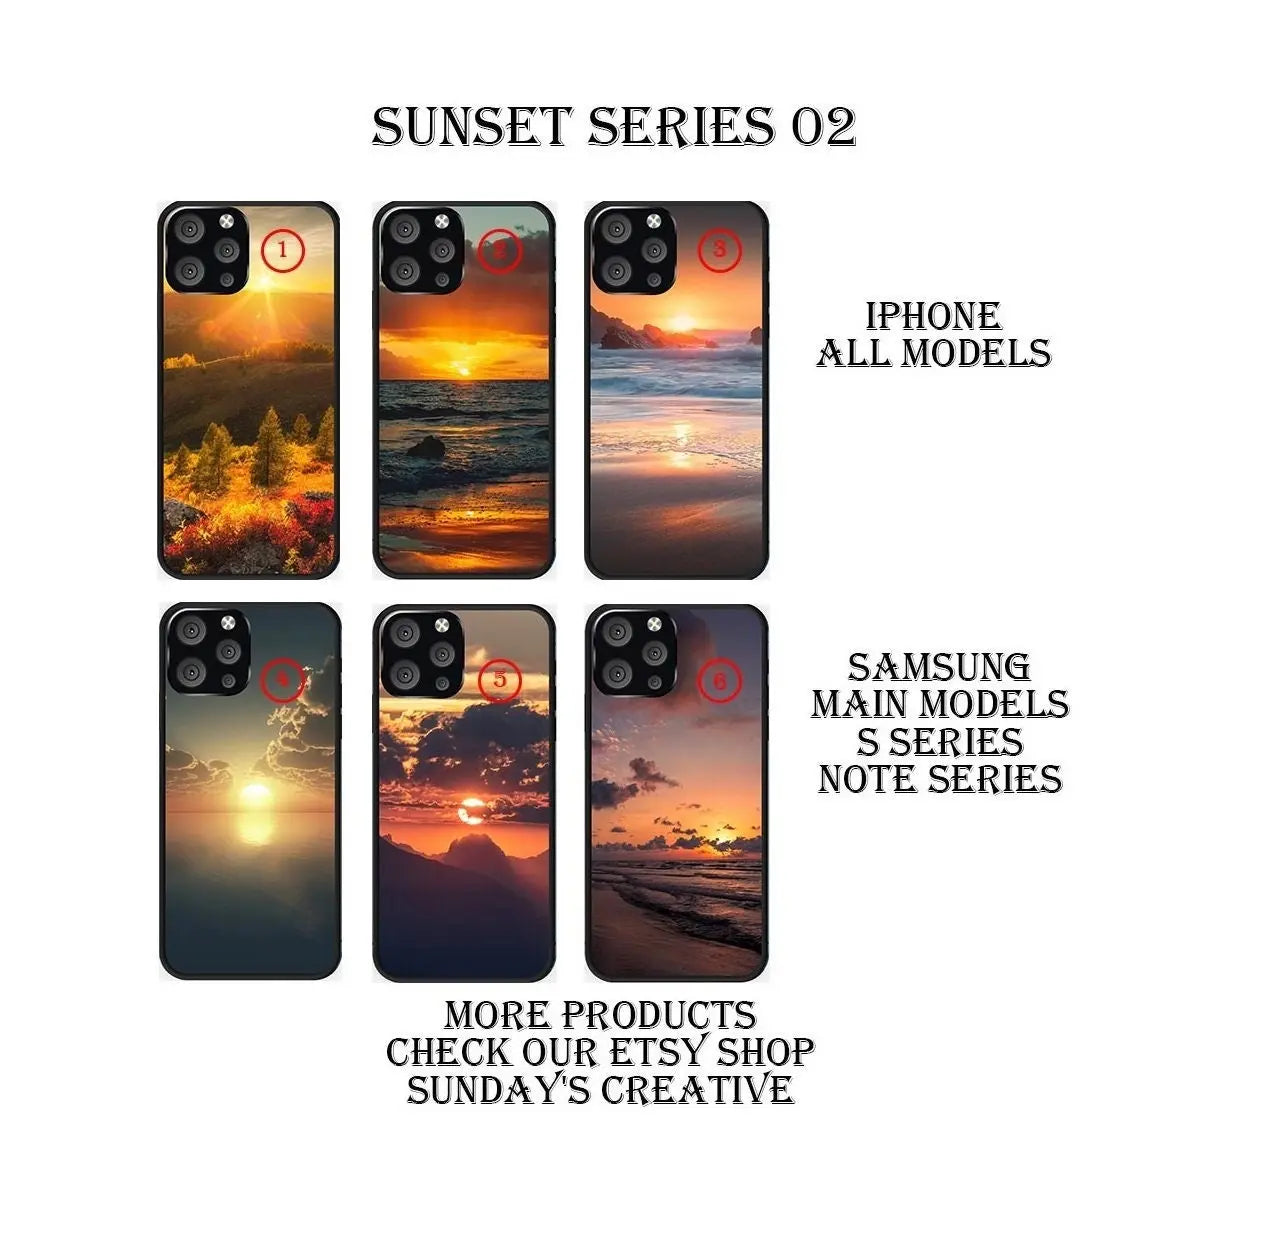 Designed phone cases Sunset series 02 Sunday's Creative